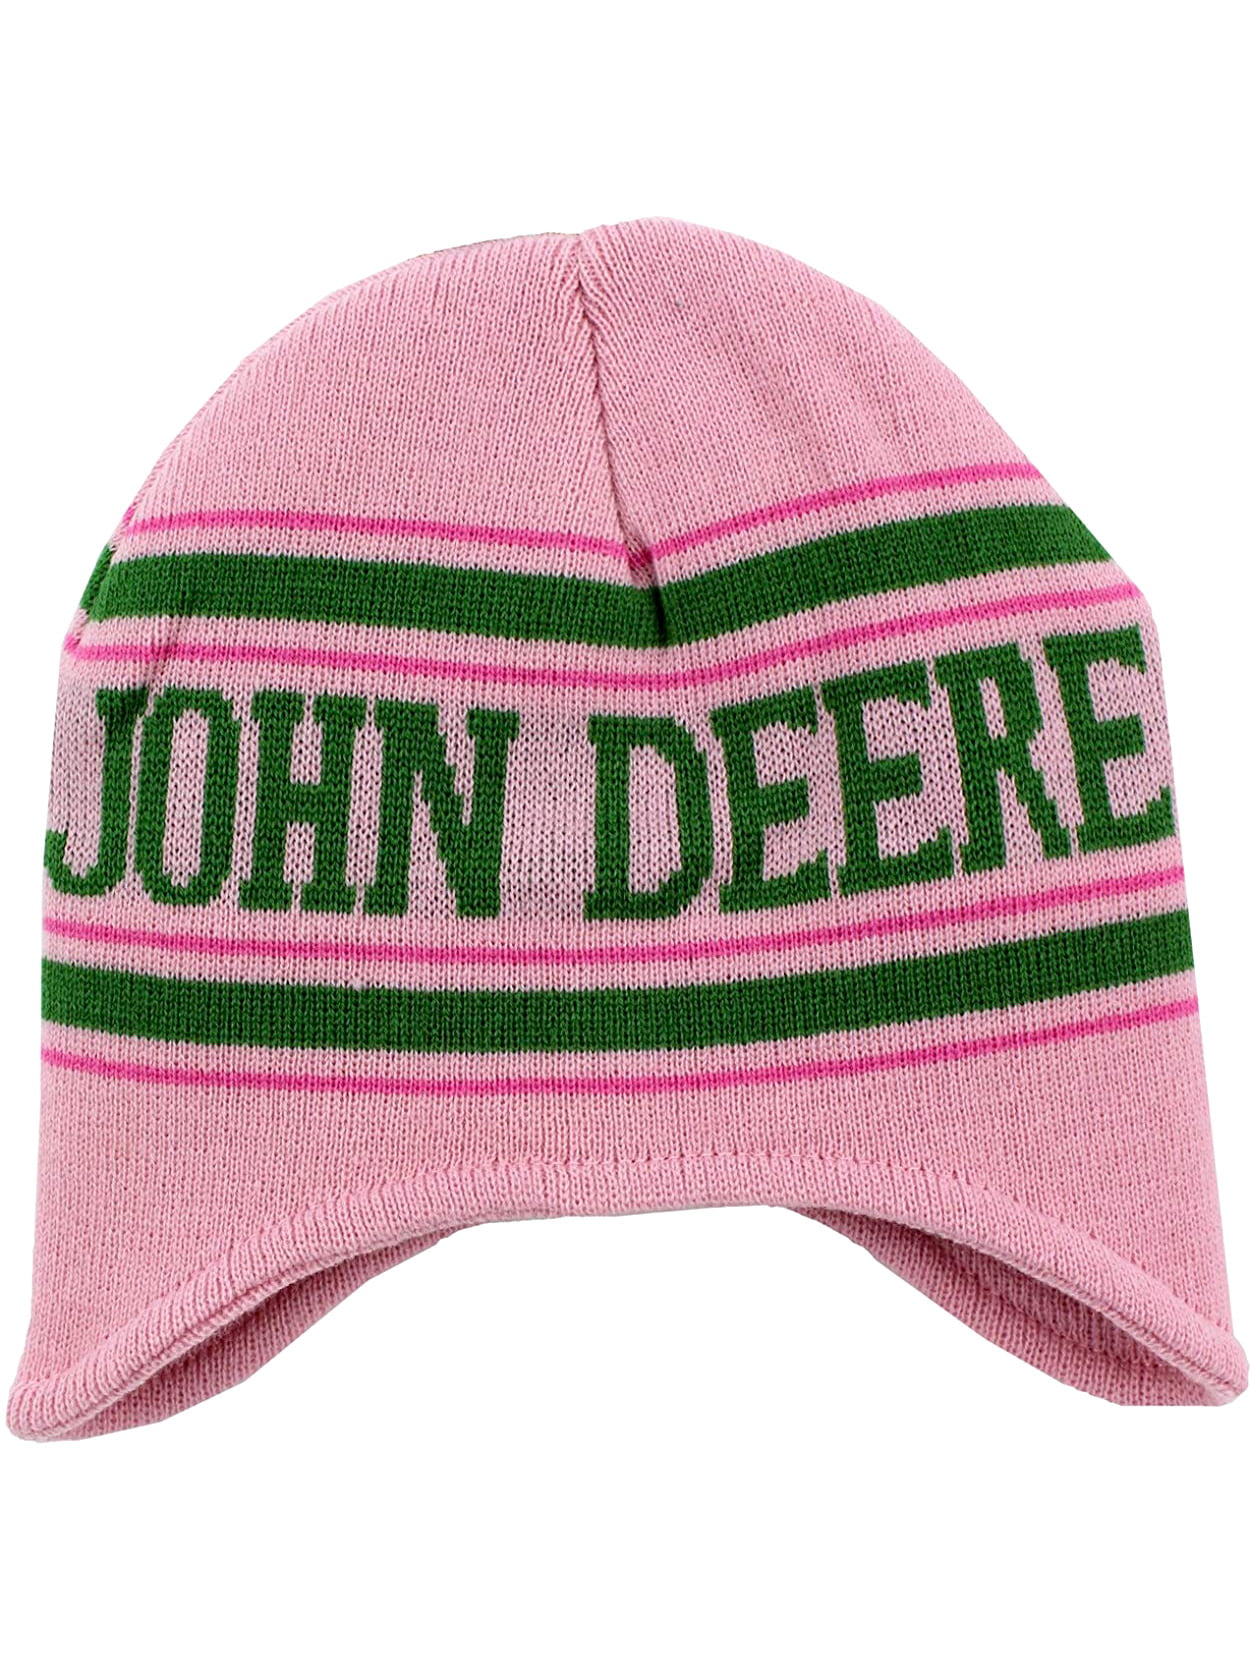 John Deere Girls Beanie Hat Little Kid/Big Kid